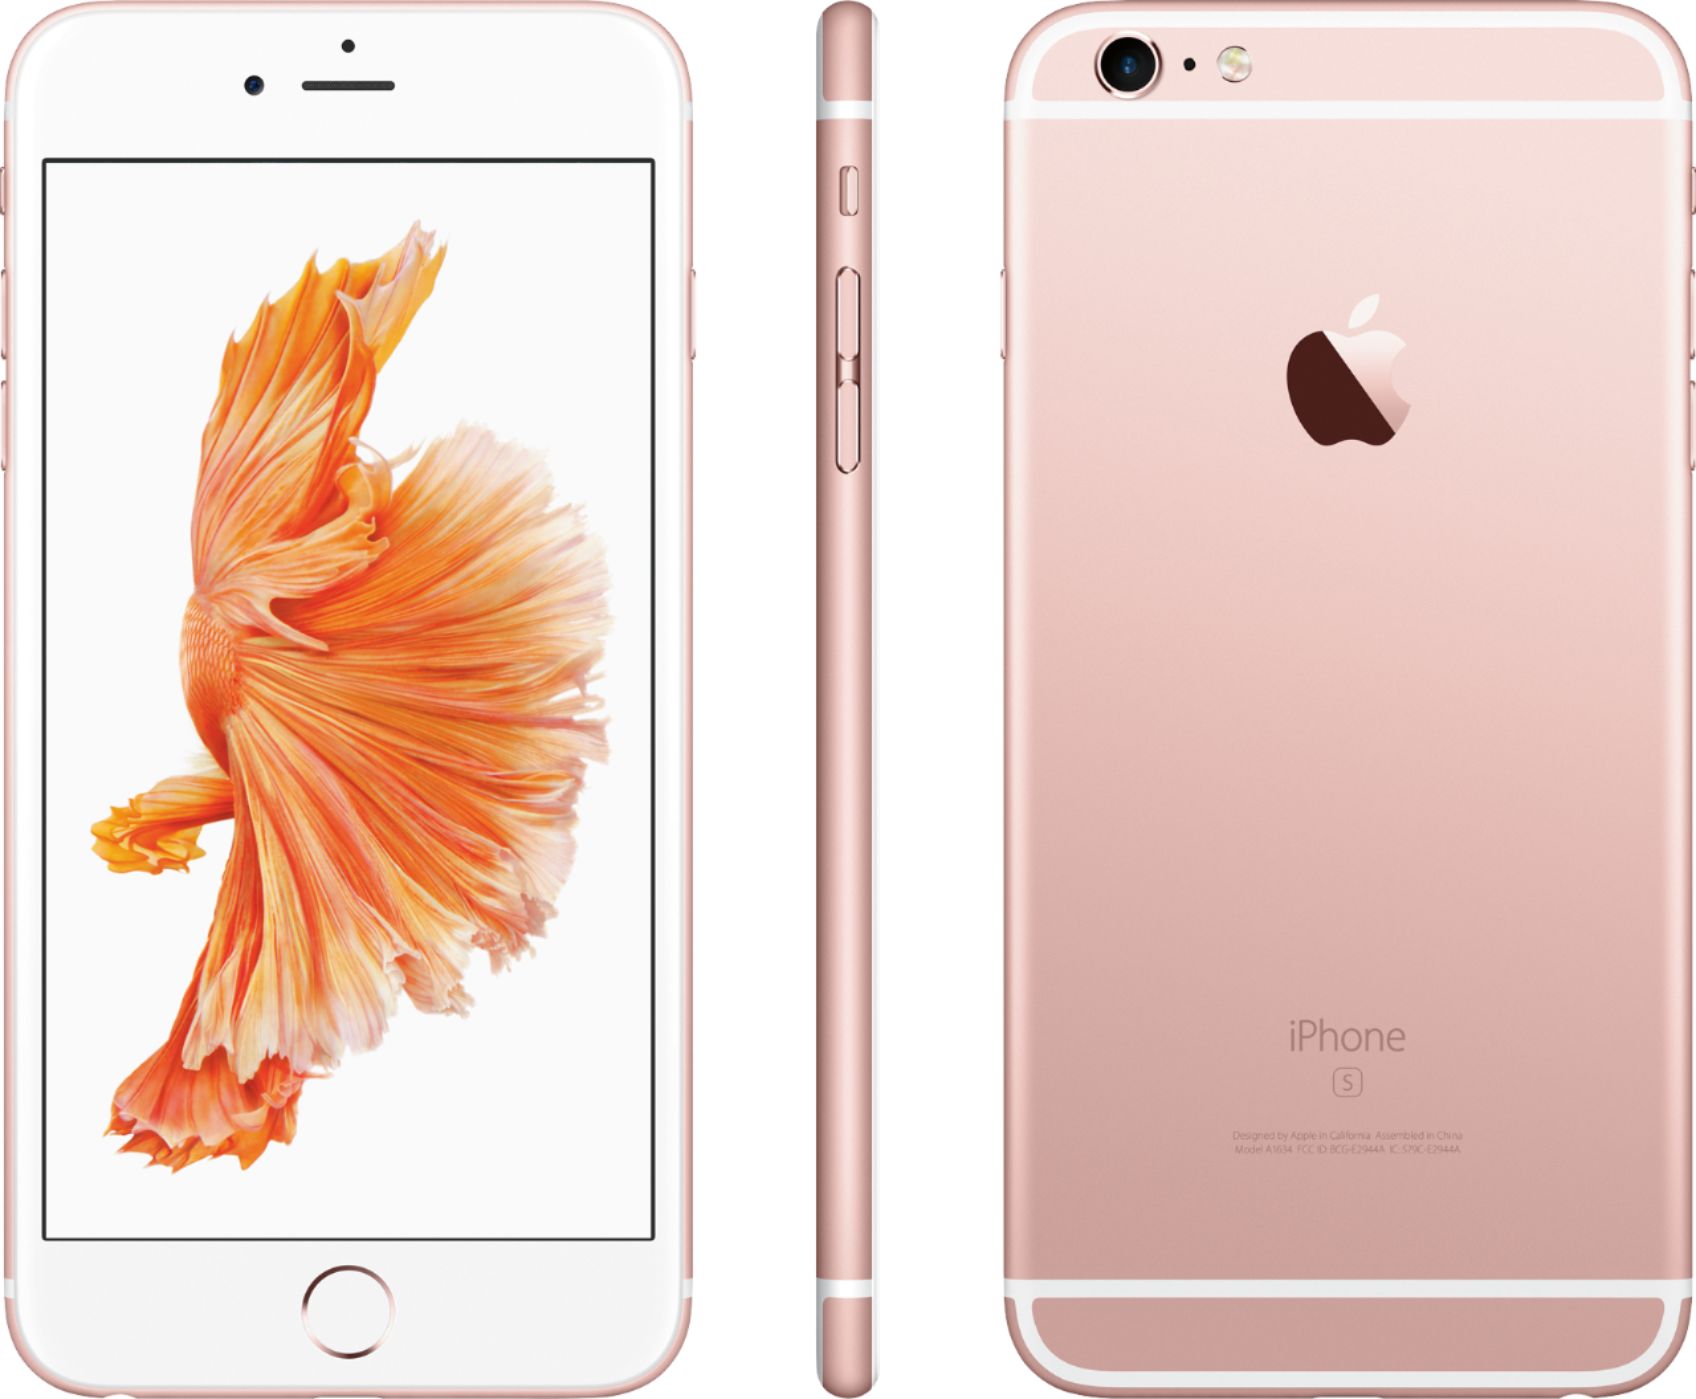 iPhone 6s Rose Gold 128 GB SIMフリー